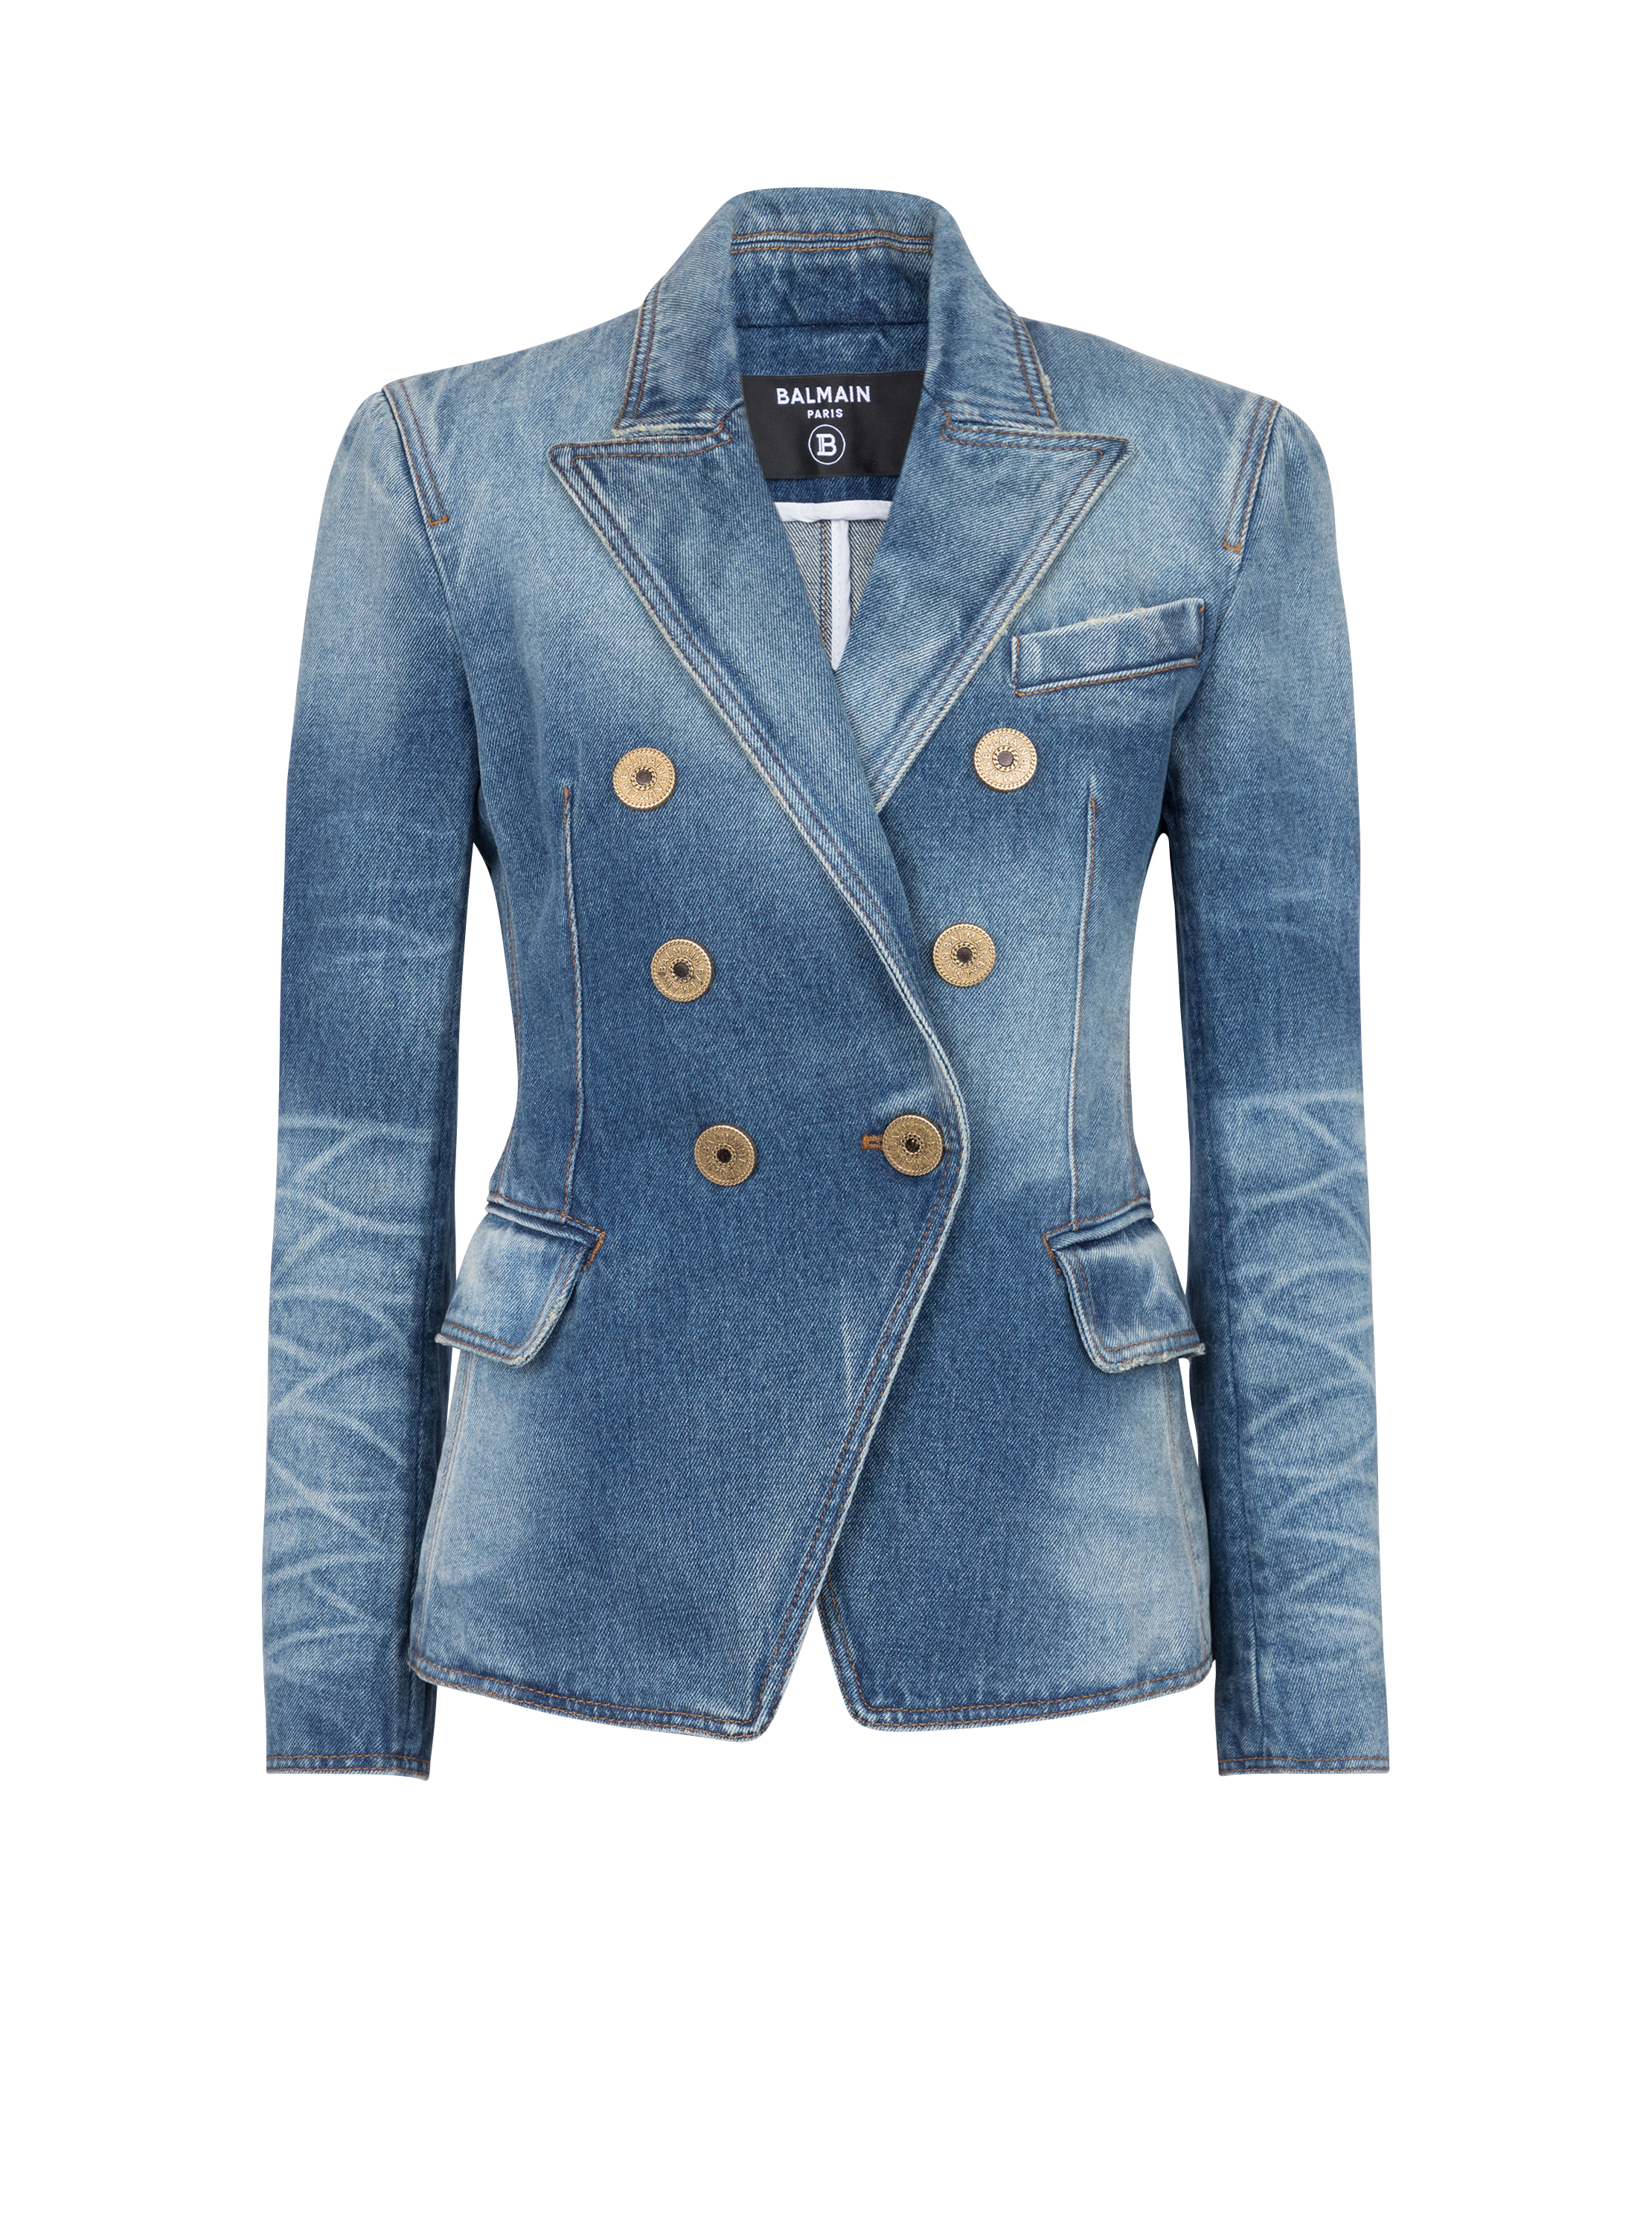 6-button denim jacket, blue, hi-res